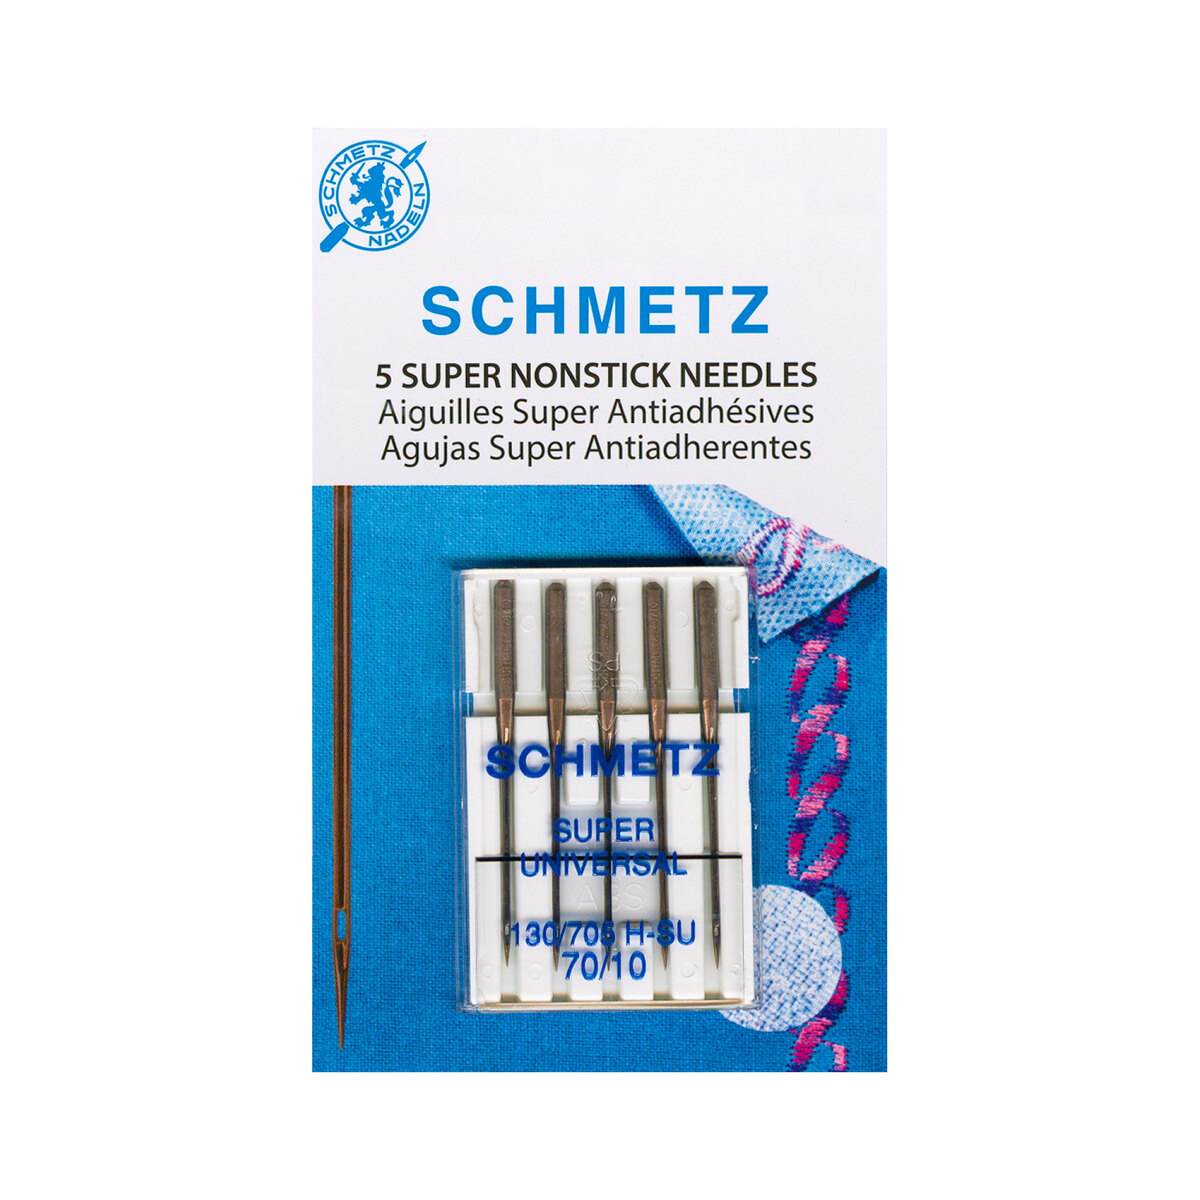 Schmetz Universal Machine Needle Sizes 70/10 to 100/16, 10 count